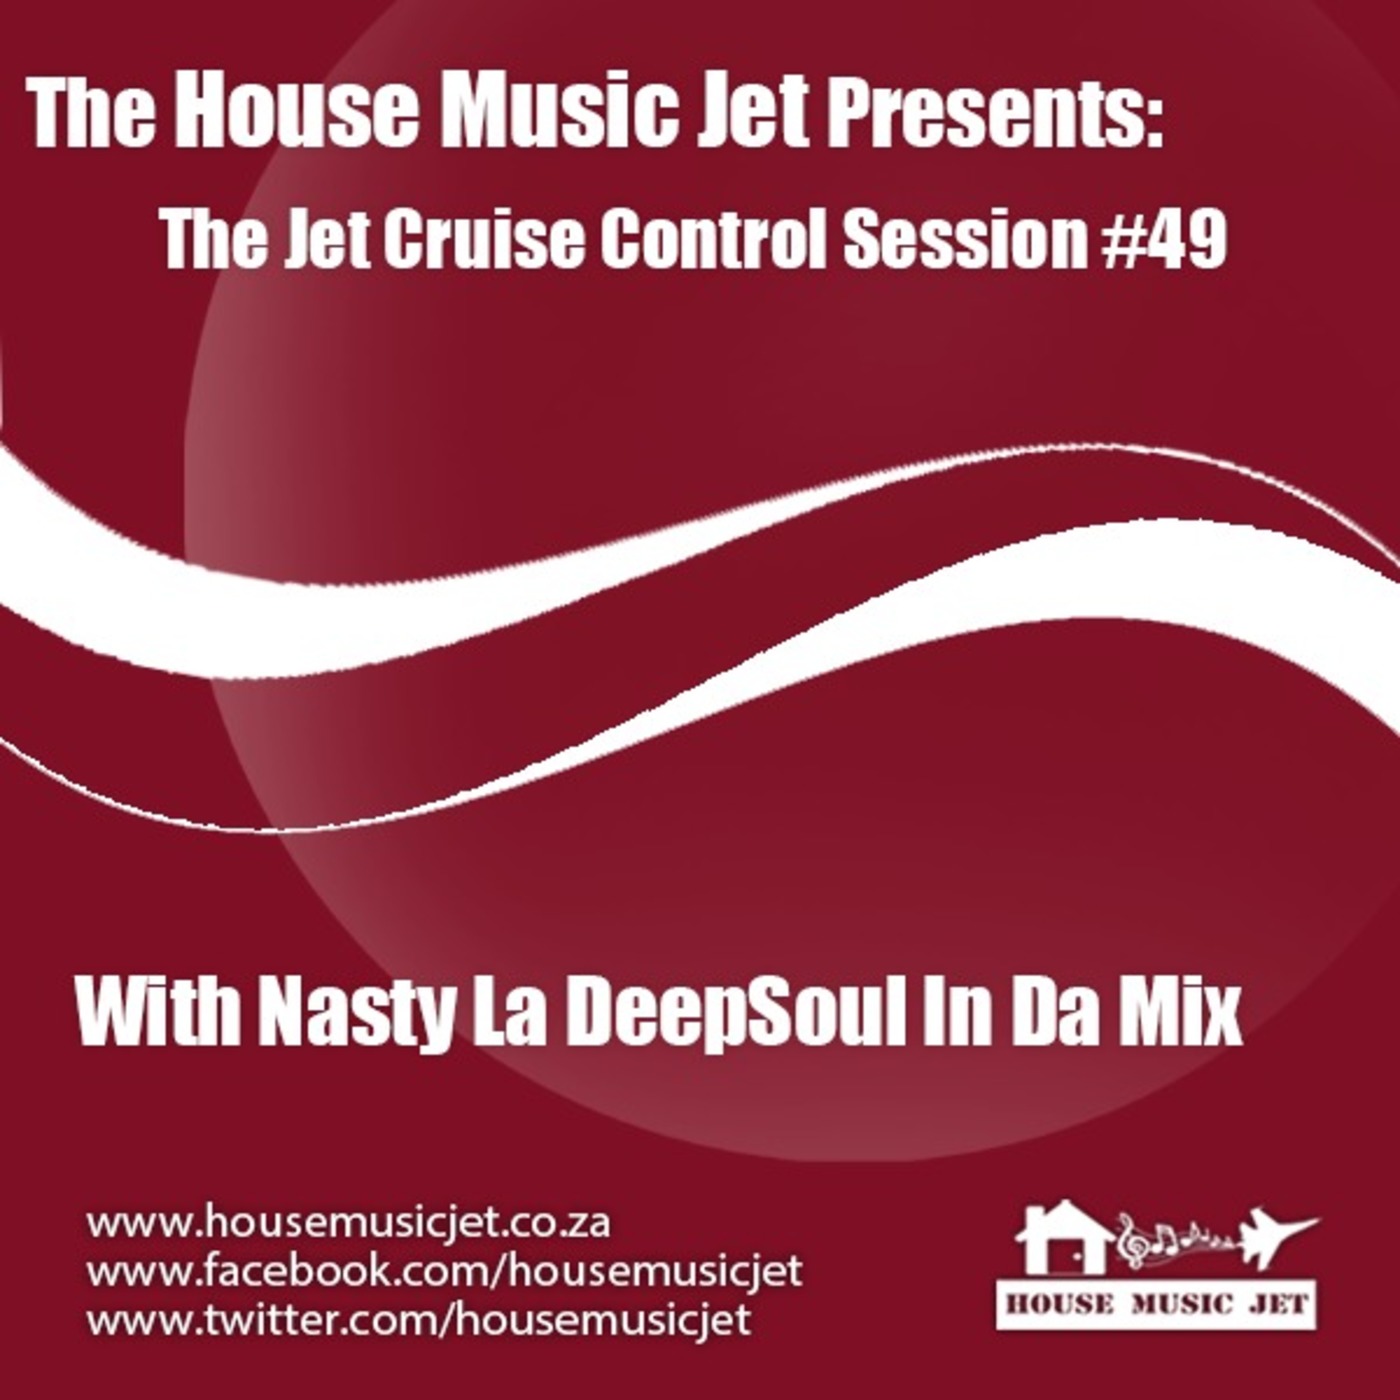 Nasty La DeepSoul In Da Mix – Jet Cruise Control Session 49